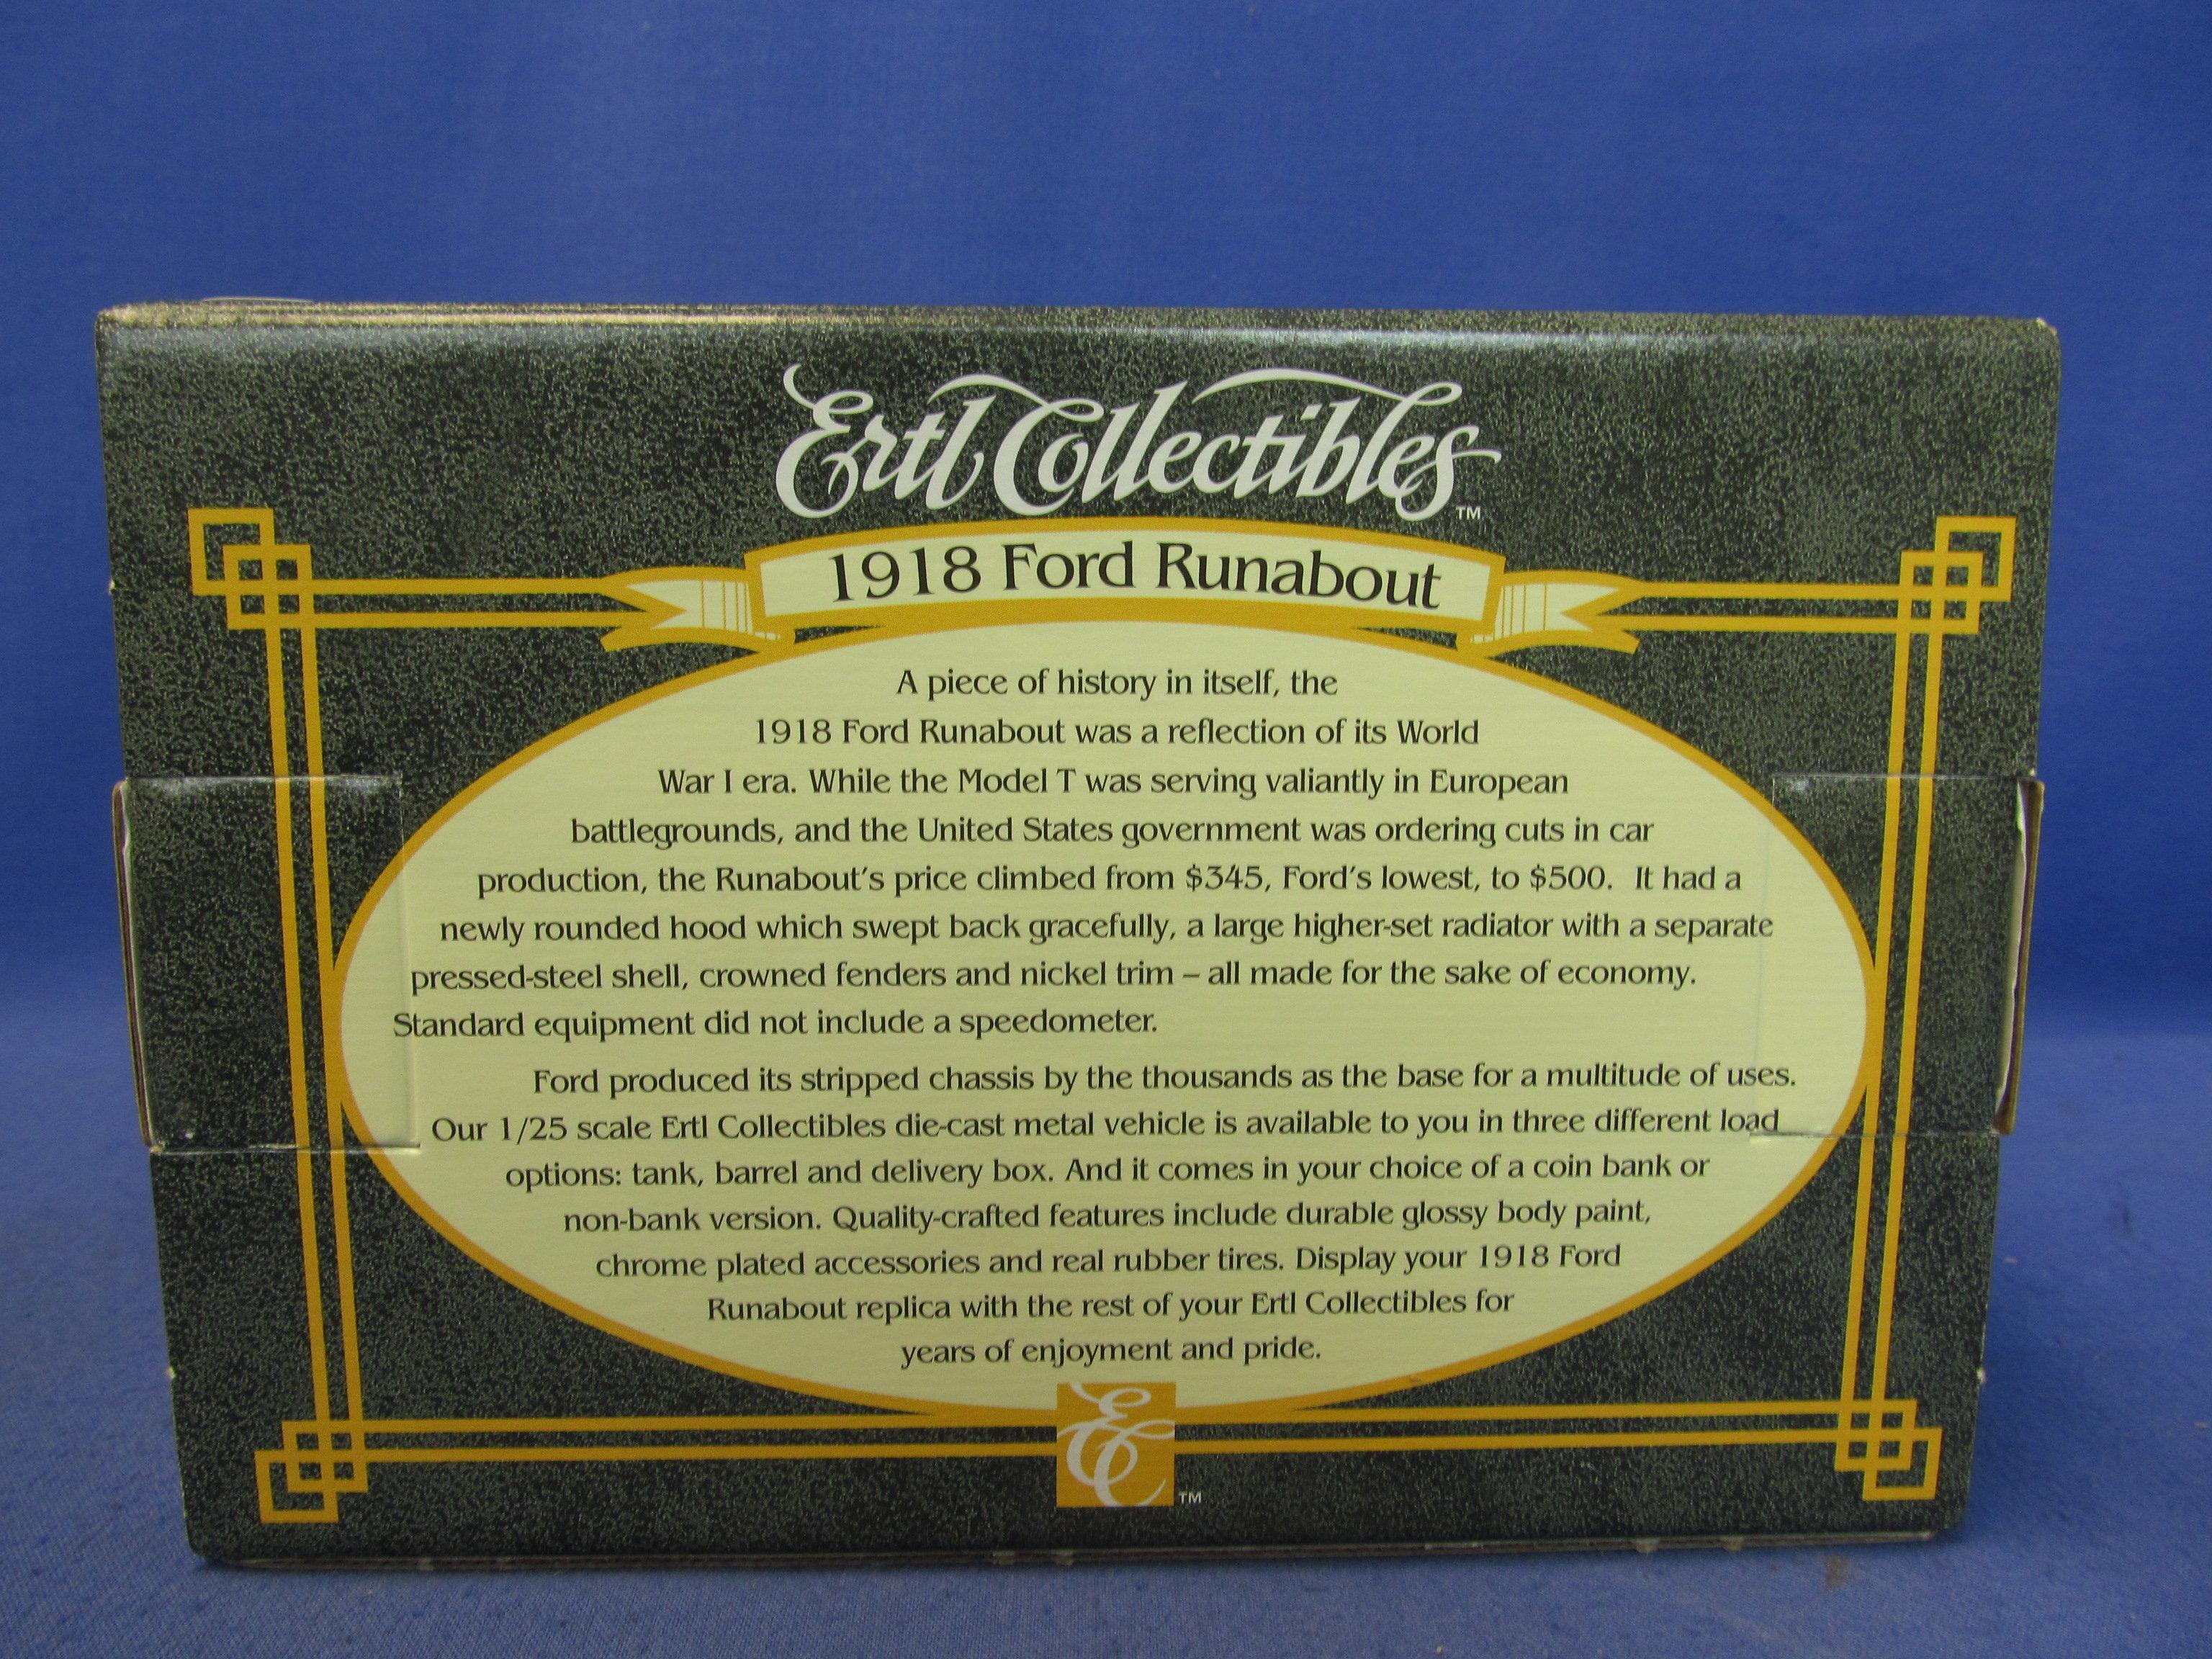 Ertl Collectibles 1918 Ford Runabout Die Cast Metal Vehicle – 1995 – Fleet Farm Anniversary  – NIB